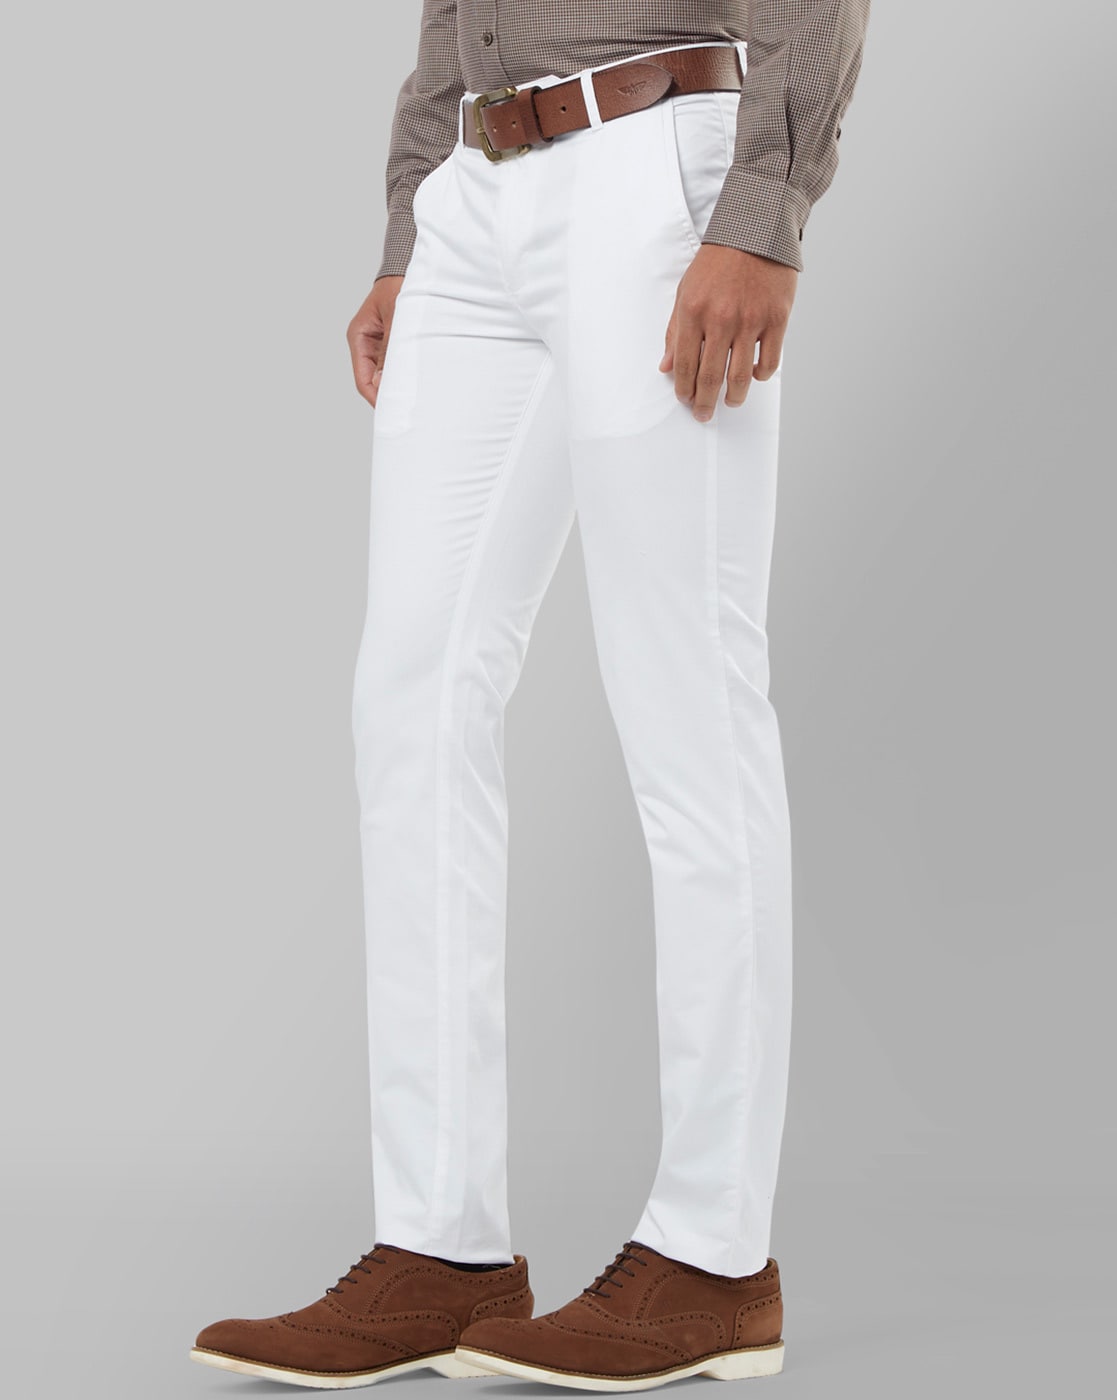 COOFANDY Mens Classic Fit Flat Front Dress Pants No Iron Premium Casual  Pants at Amazon Mens Clothing store